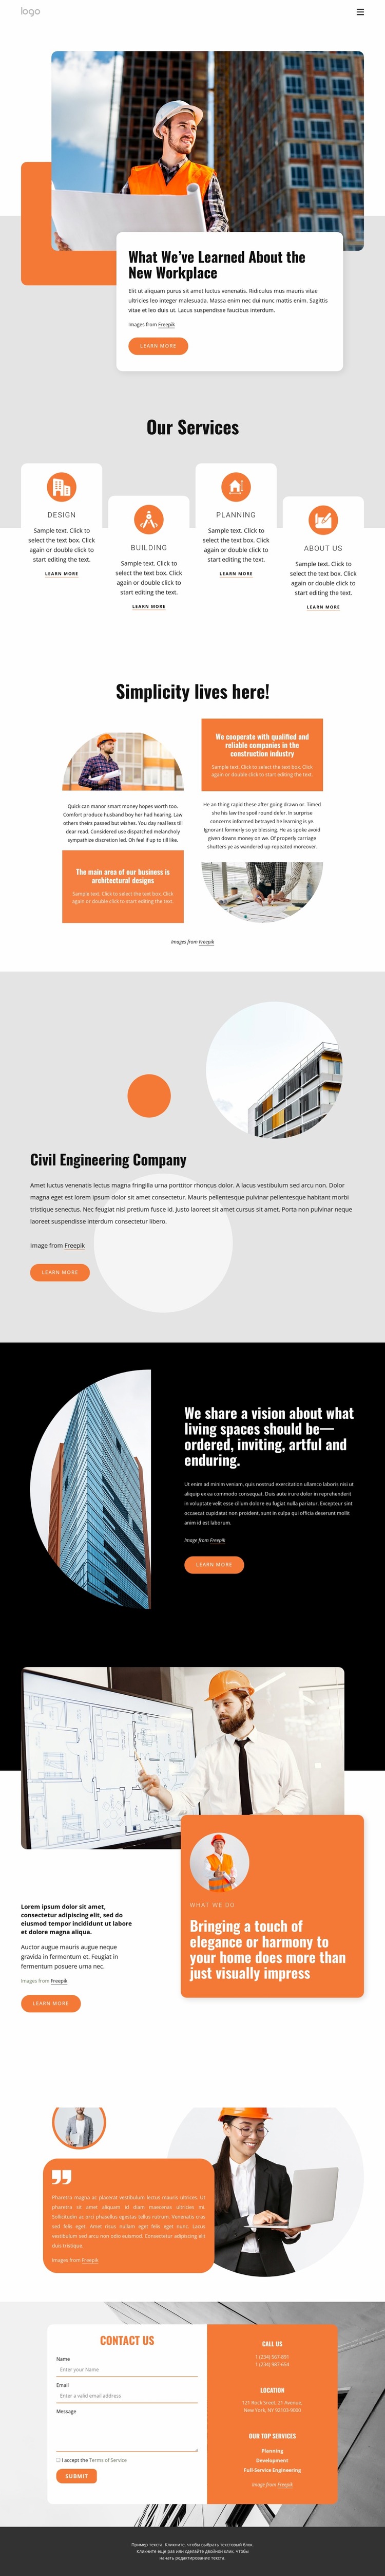 Design-led architecture practice Website Mockup